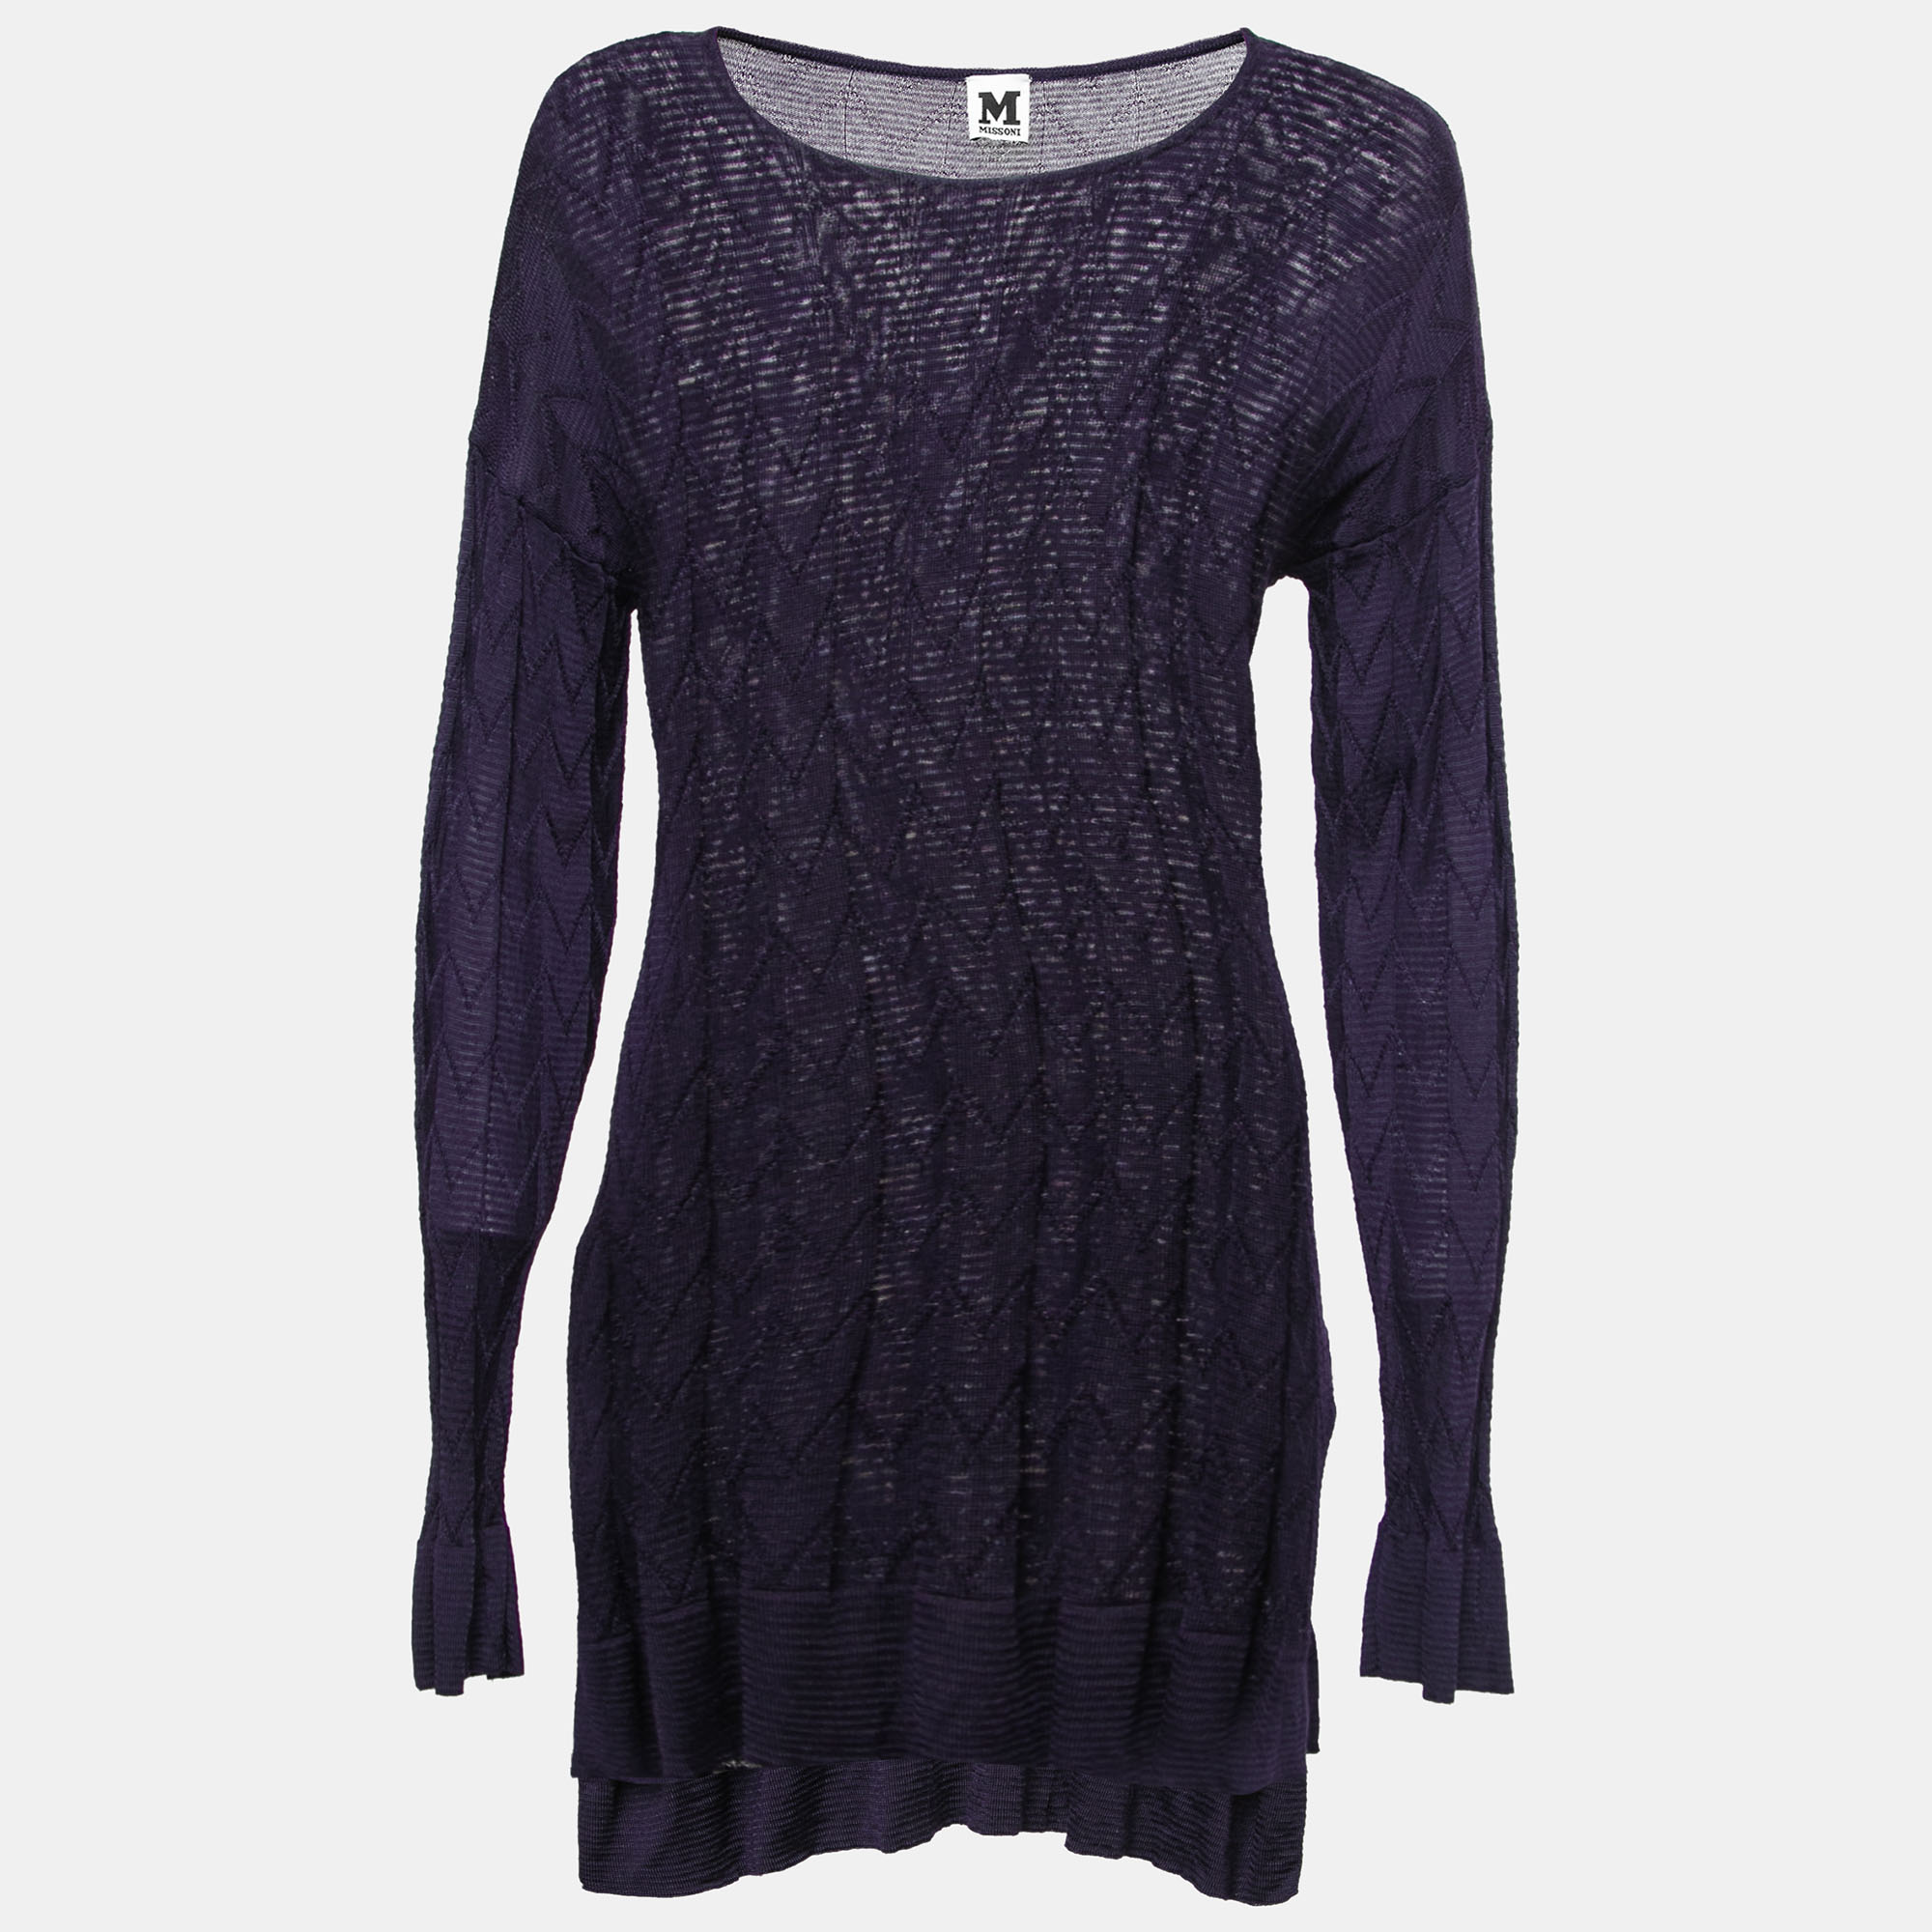 M missoni purple chevron patterned wool knitted top m